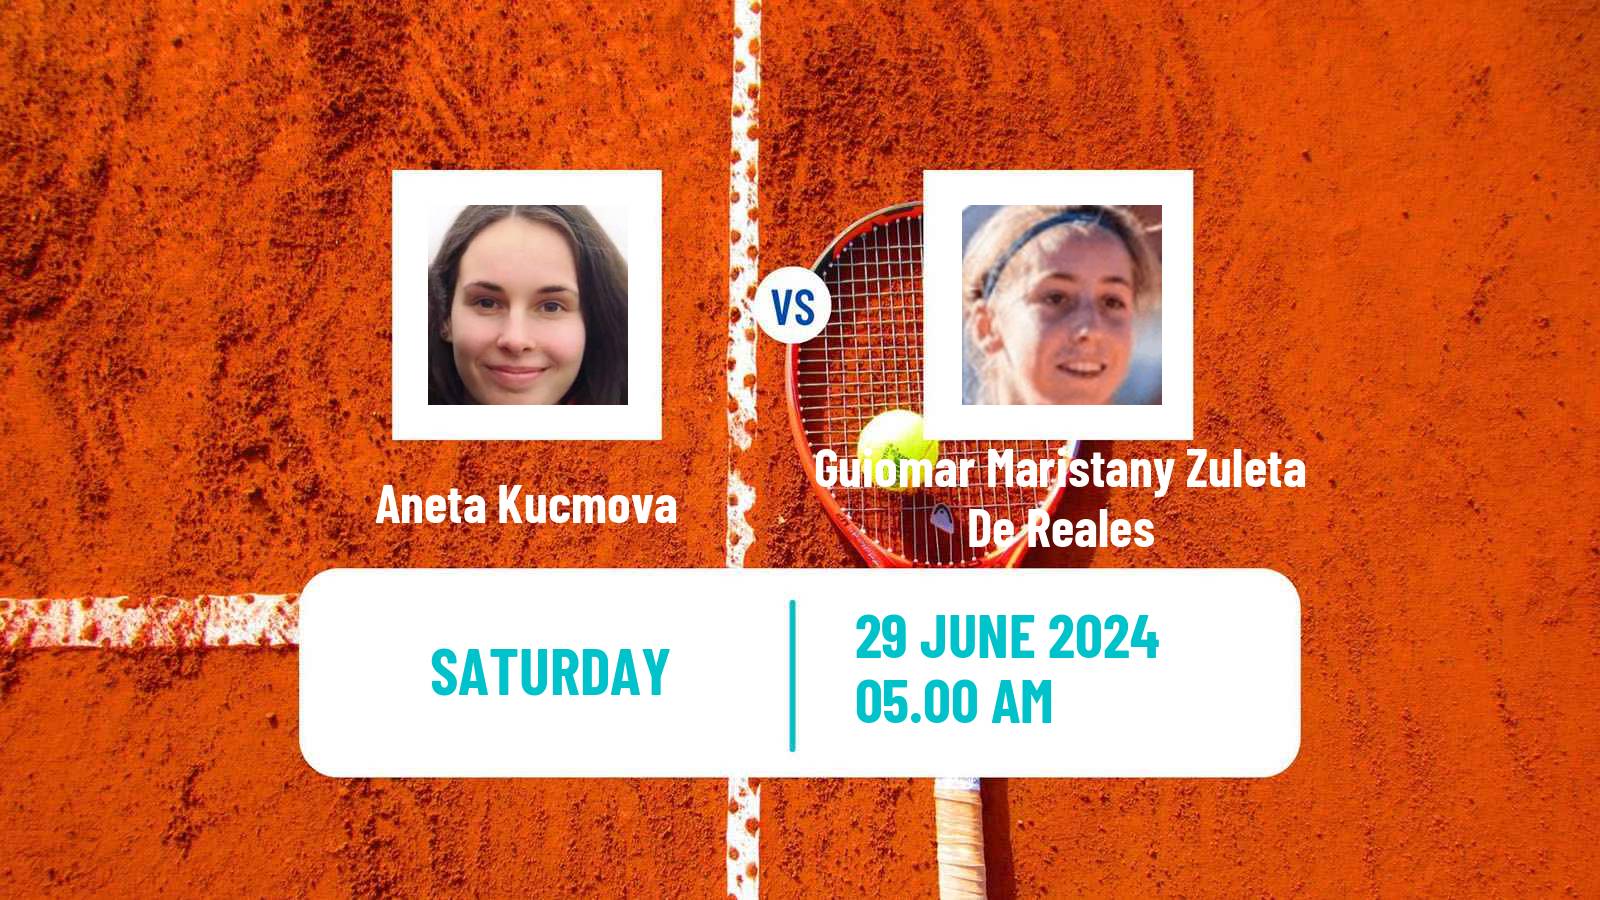 Tennis ITF W75 Doksy Stare Splavy Women Aneta Kucmova - Guiomar Maristany Zuleta De Reales